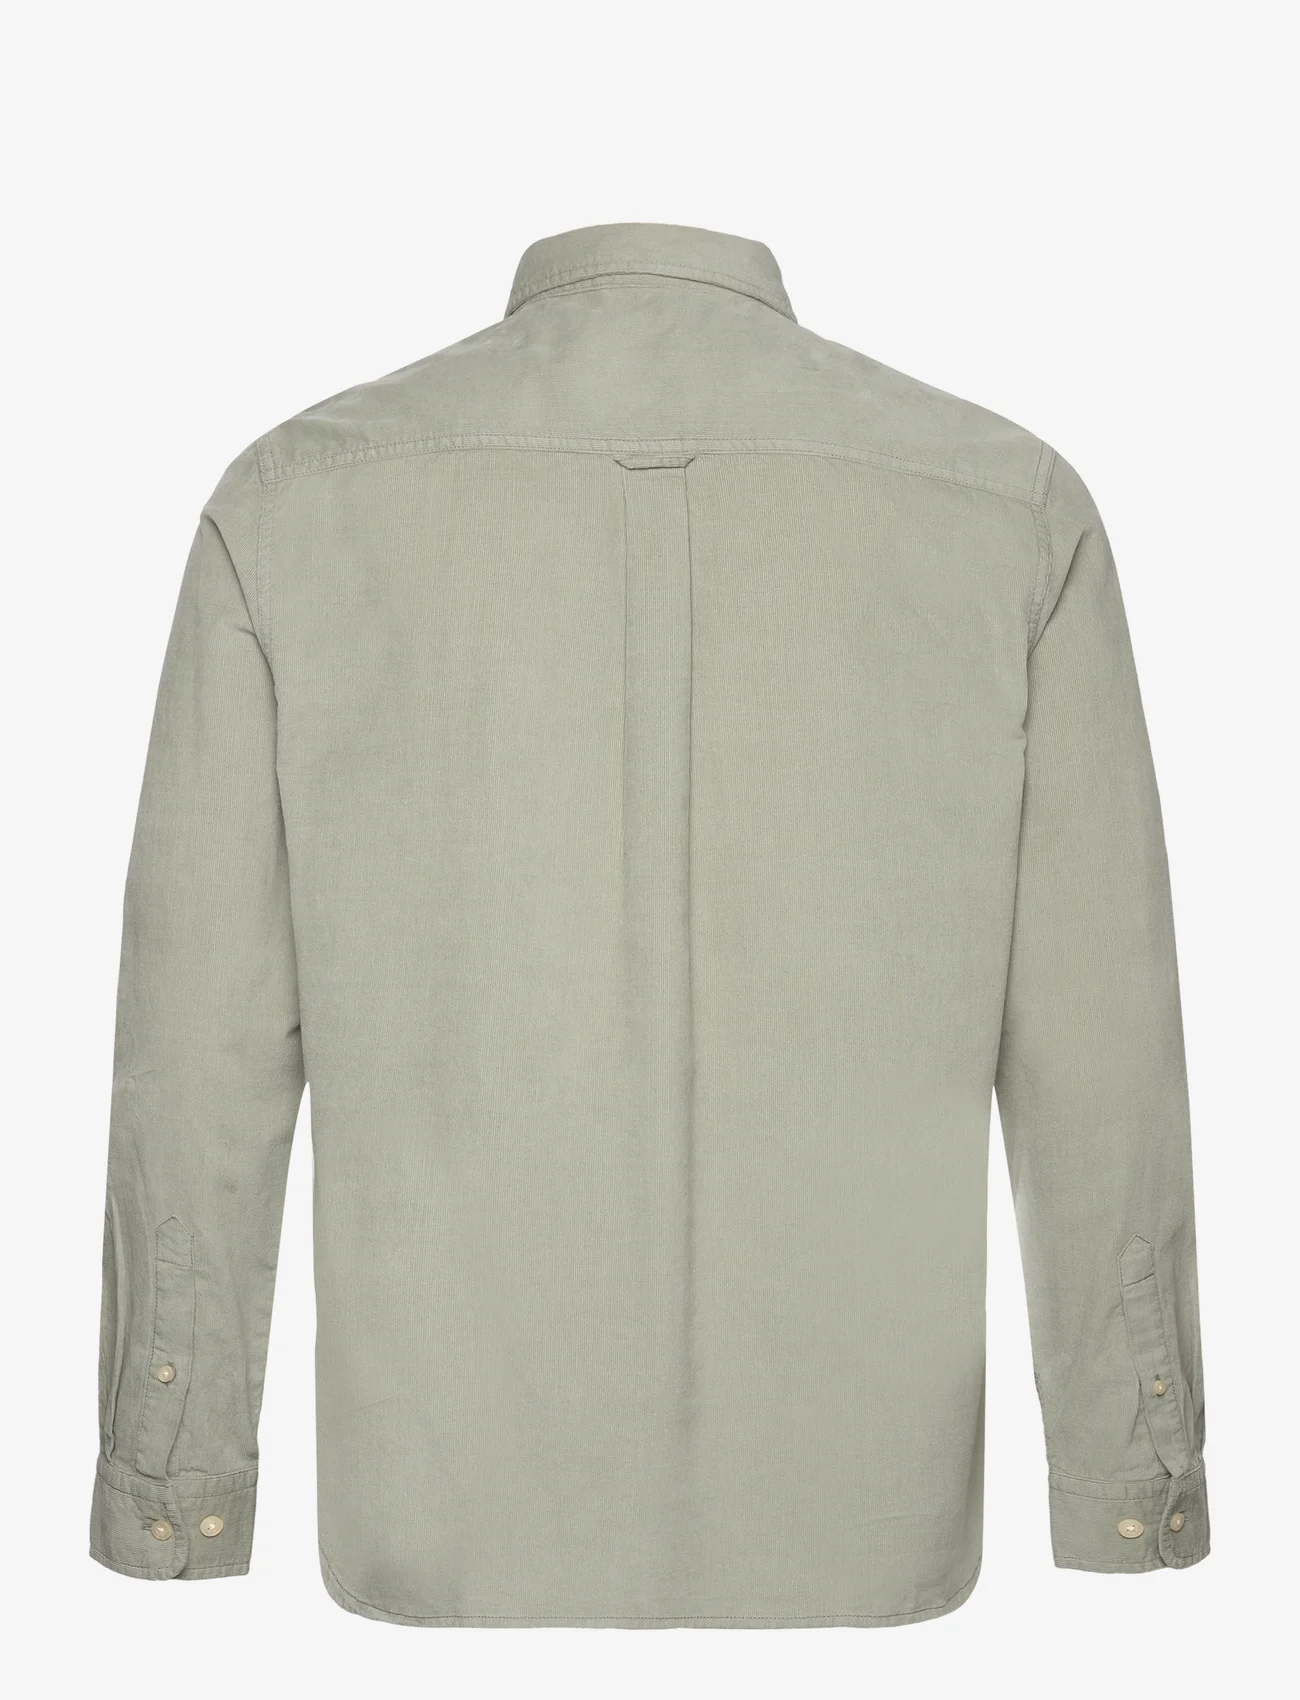 Knowledge Cotton Apparel - Regular fit corduroy shirt - GOTS/V - basic shirts - lily pad - 1